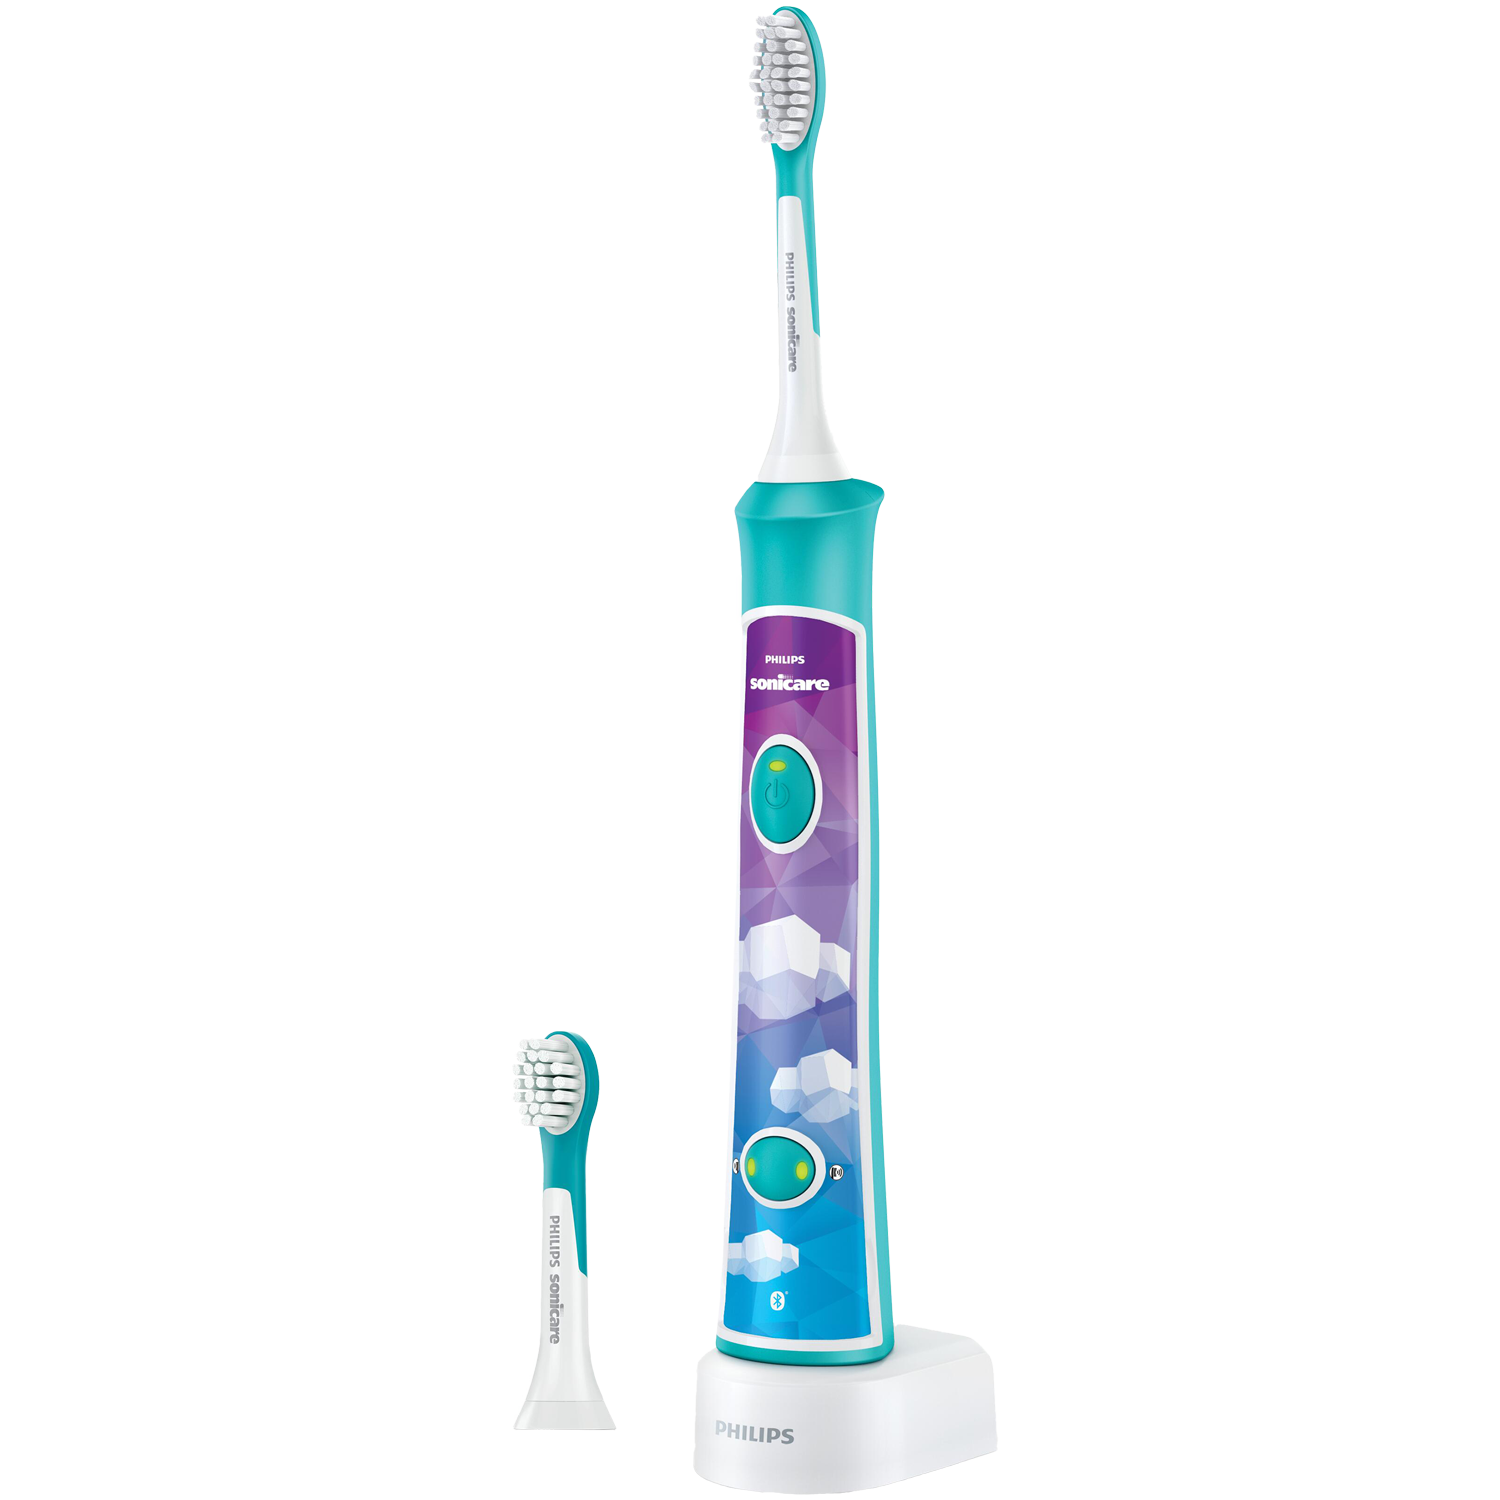 Philips Sonicare For Kids HX6322/04 электрическая зубная щетка для детей, 1 упаковка hx6100 5v usb charger for philips sonicare toothbrush hx6312 hx6320 hx6321 hx6322 hx6330 hx6340 hx6150 hx6431 hx6500 hx6411